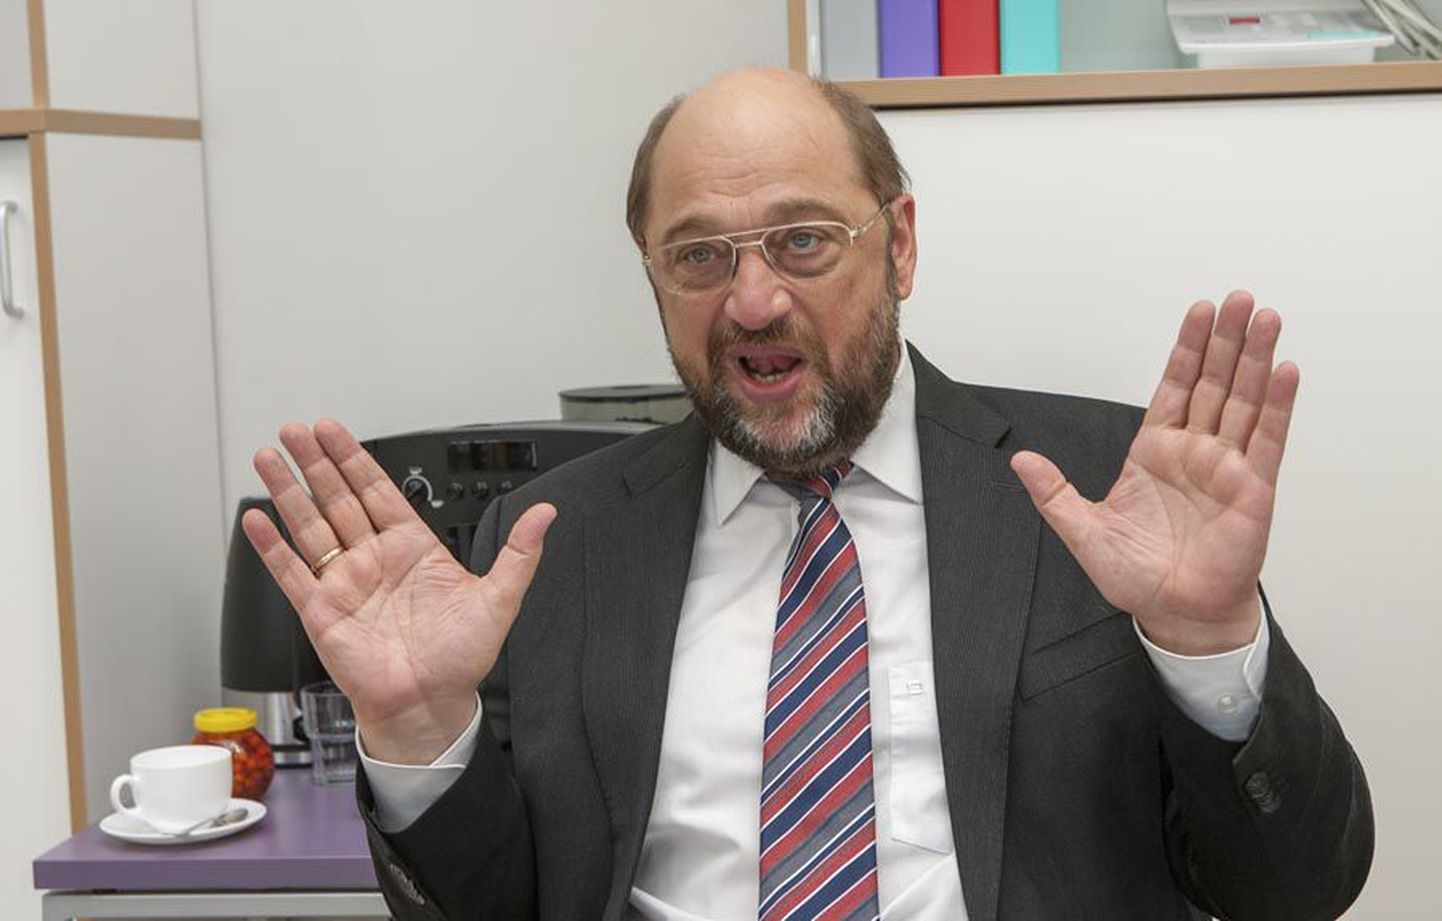 Euroopa Parlamendi president Martin Schulz